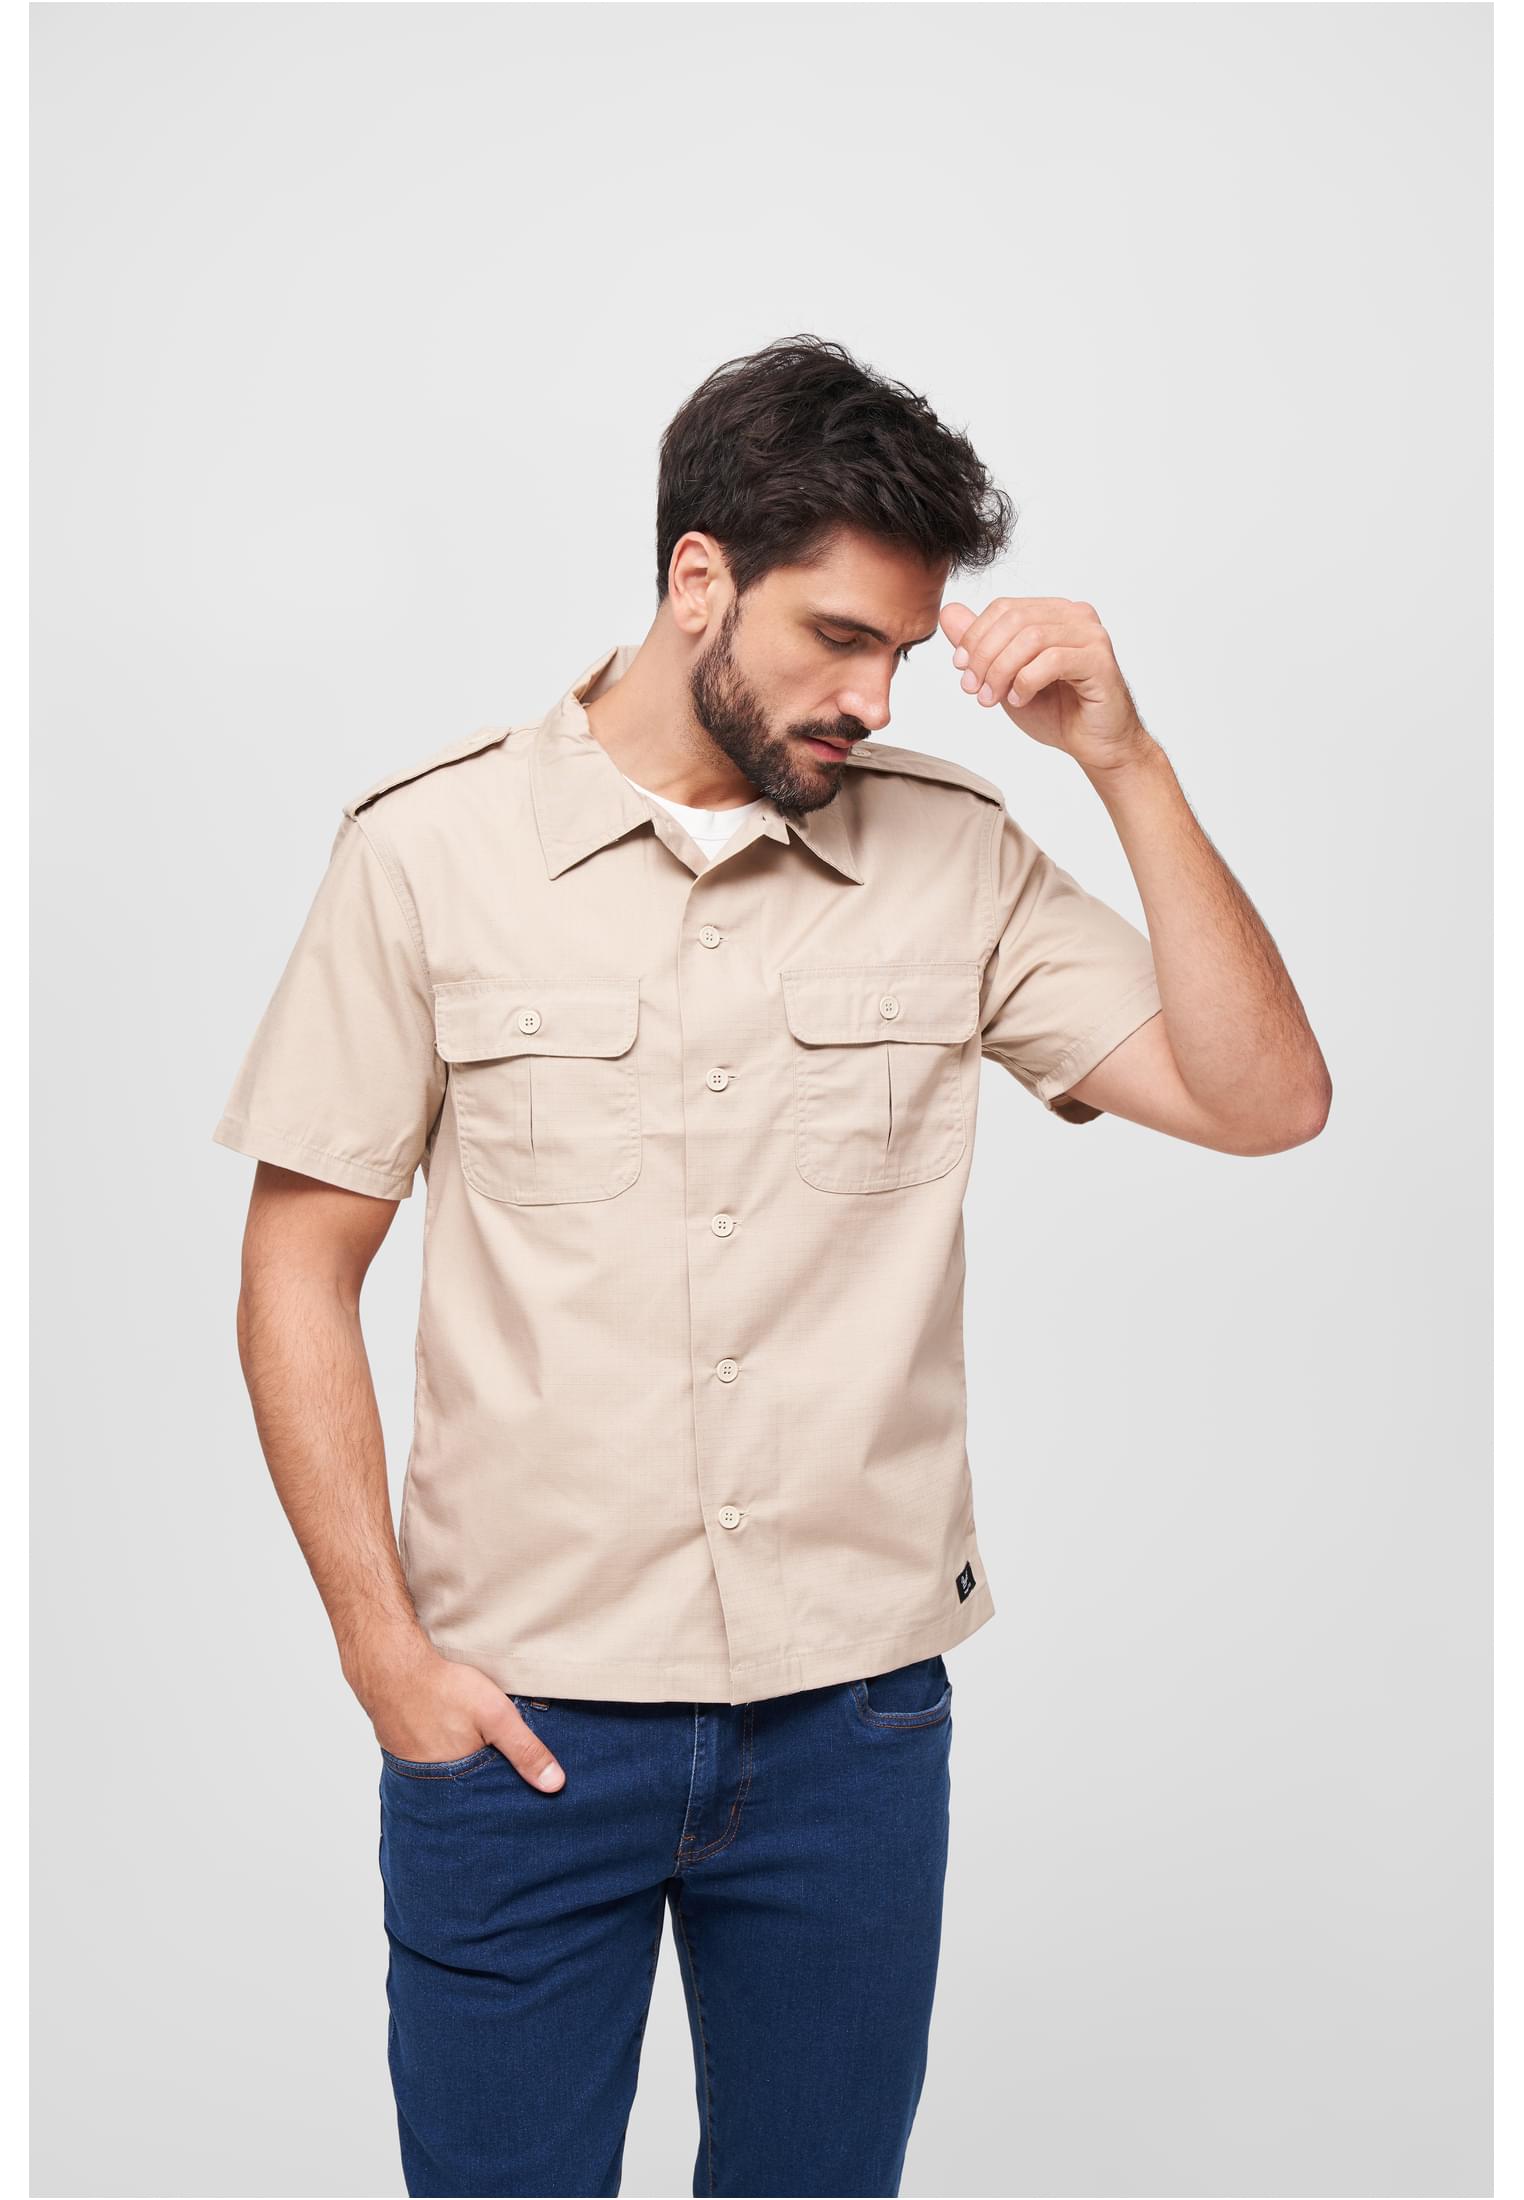 Hemden US Shirt Ripstop shortsleeve in Farbe beige